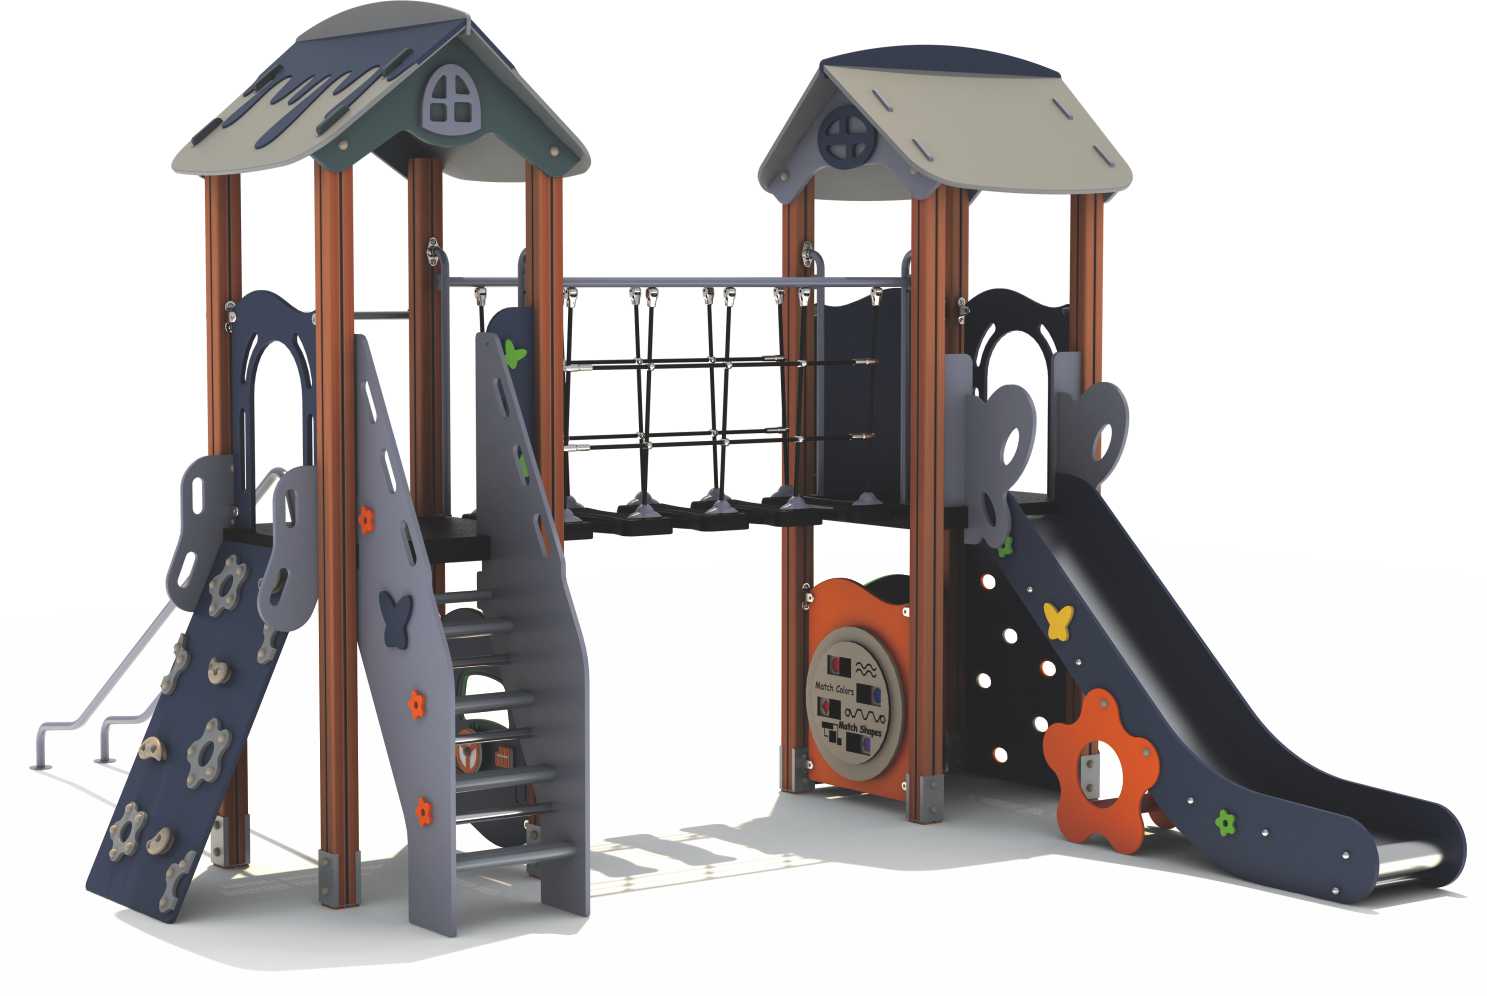 Children's Outdoor Garden Play Equipment Items Amusement Park Entertainment 